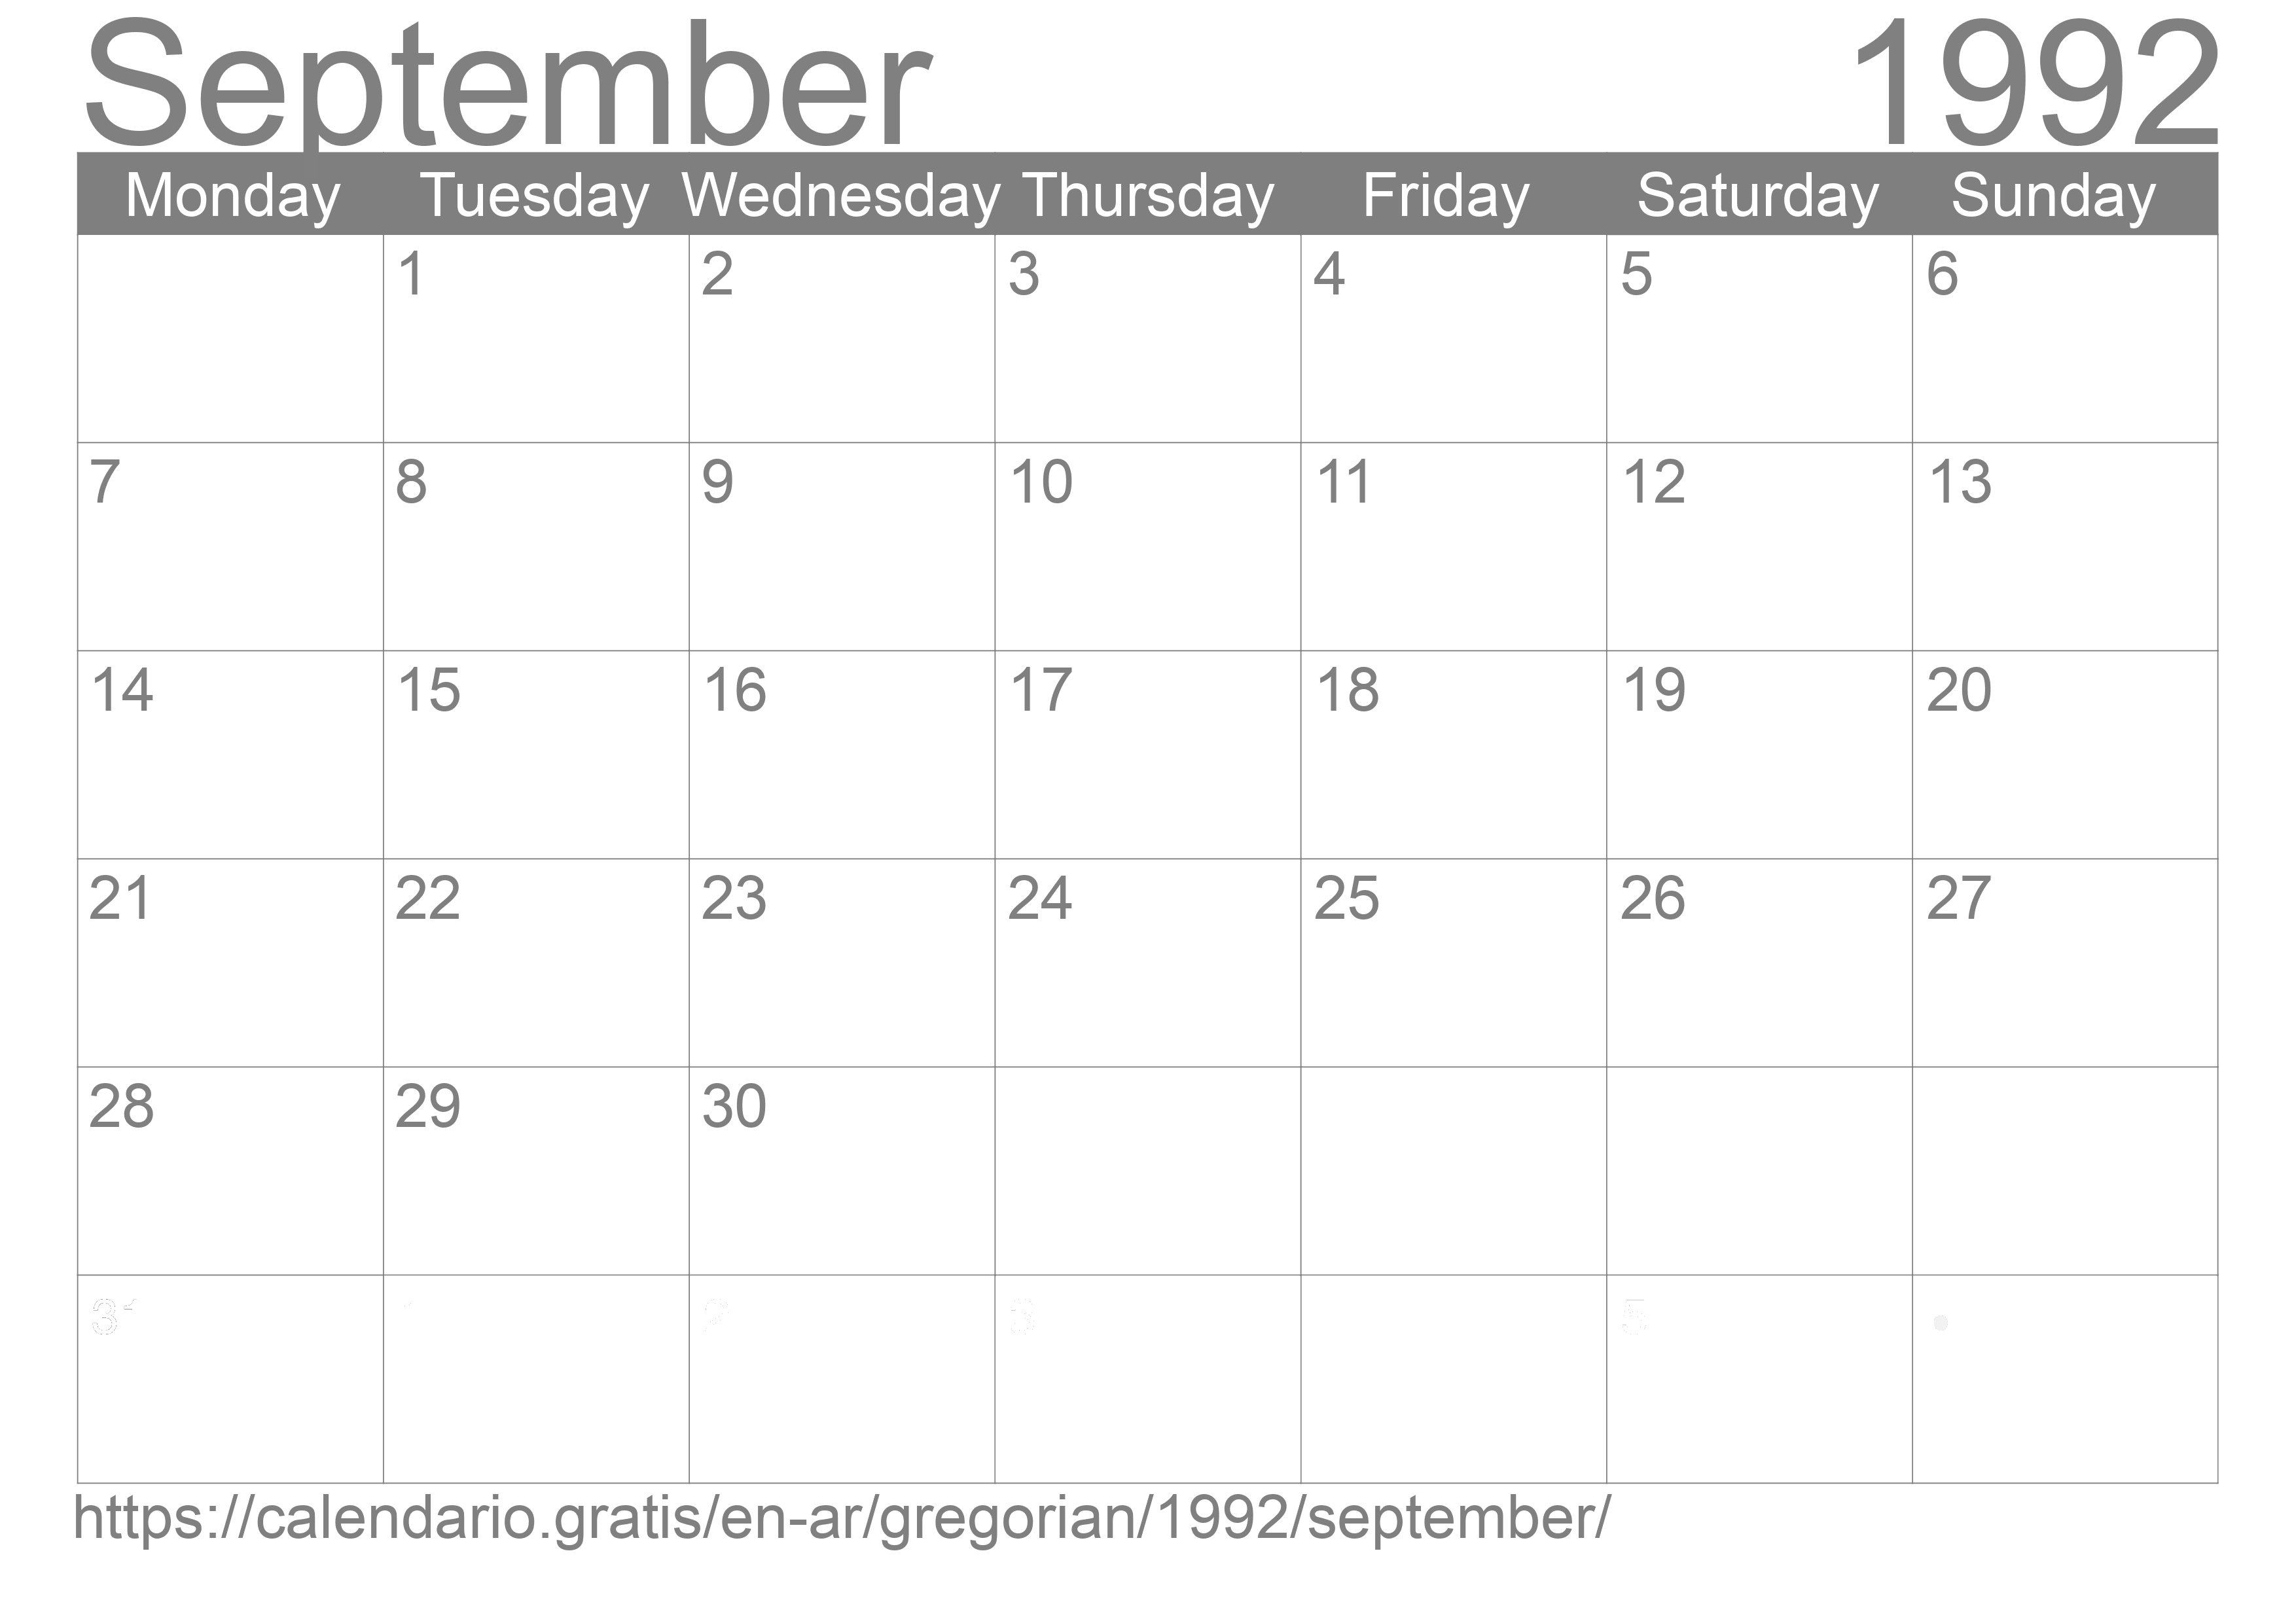 Calendar September 1992 to print